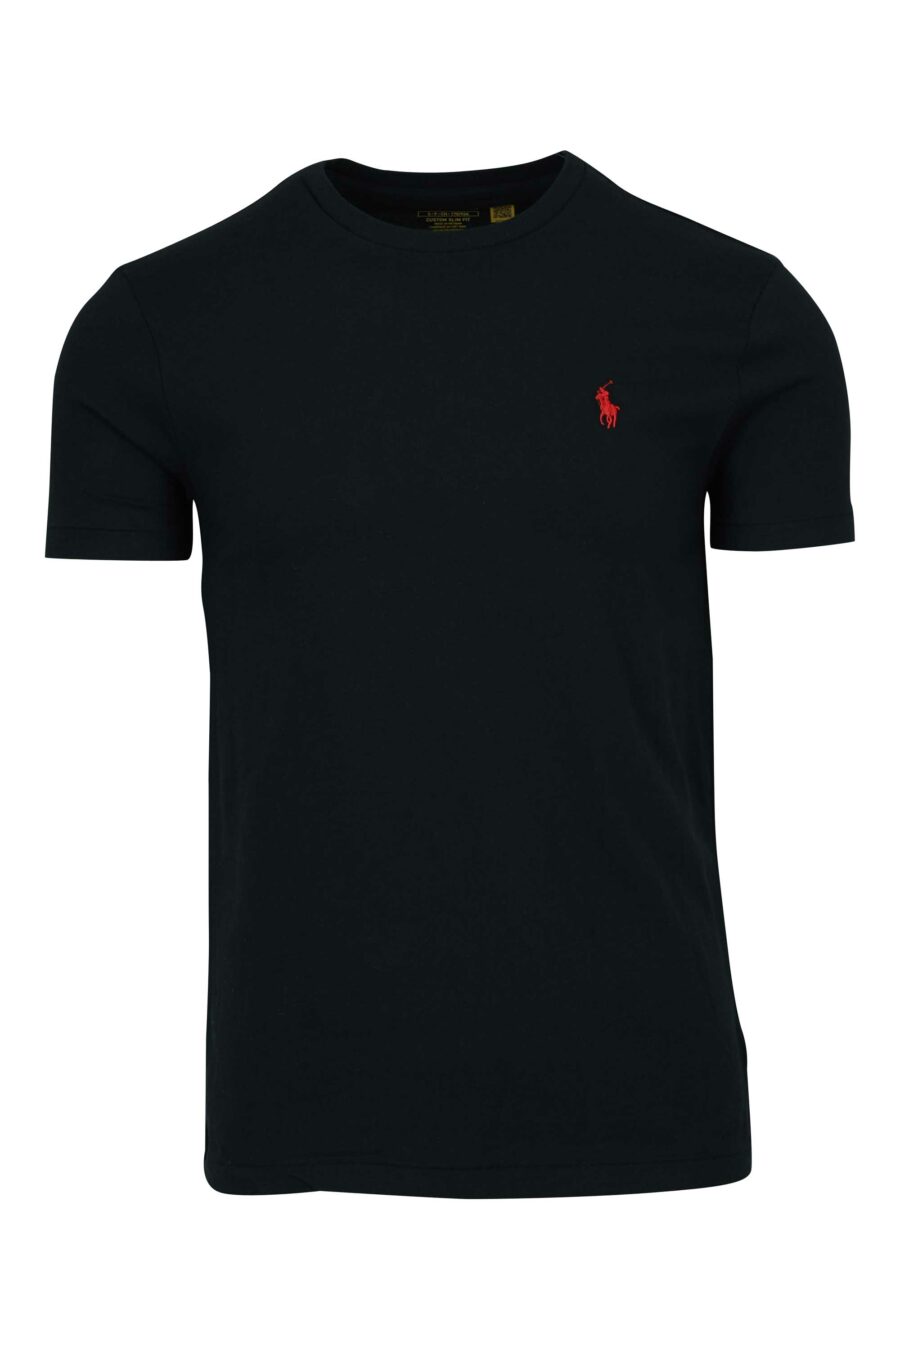 Camiseta negra con minilogo "polo" - 5045018254620